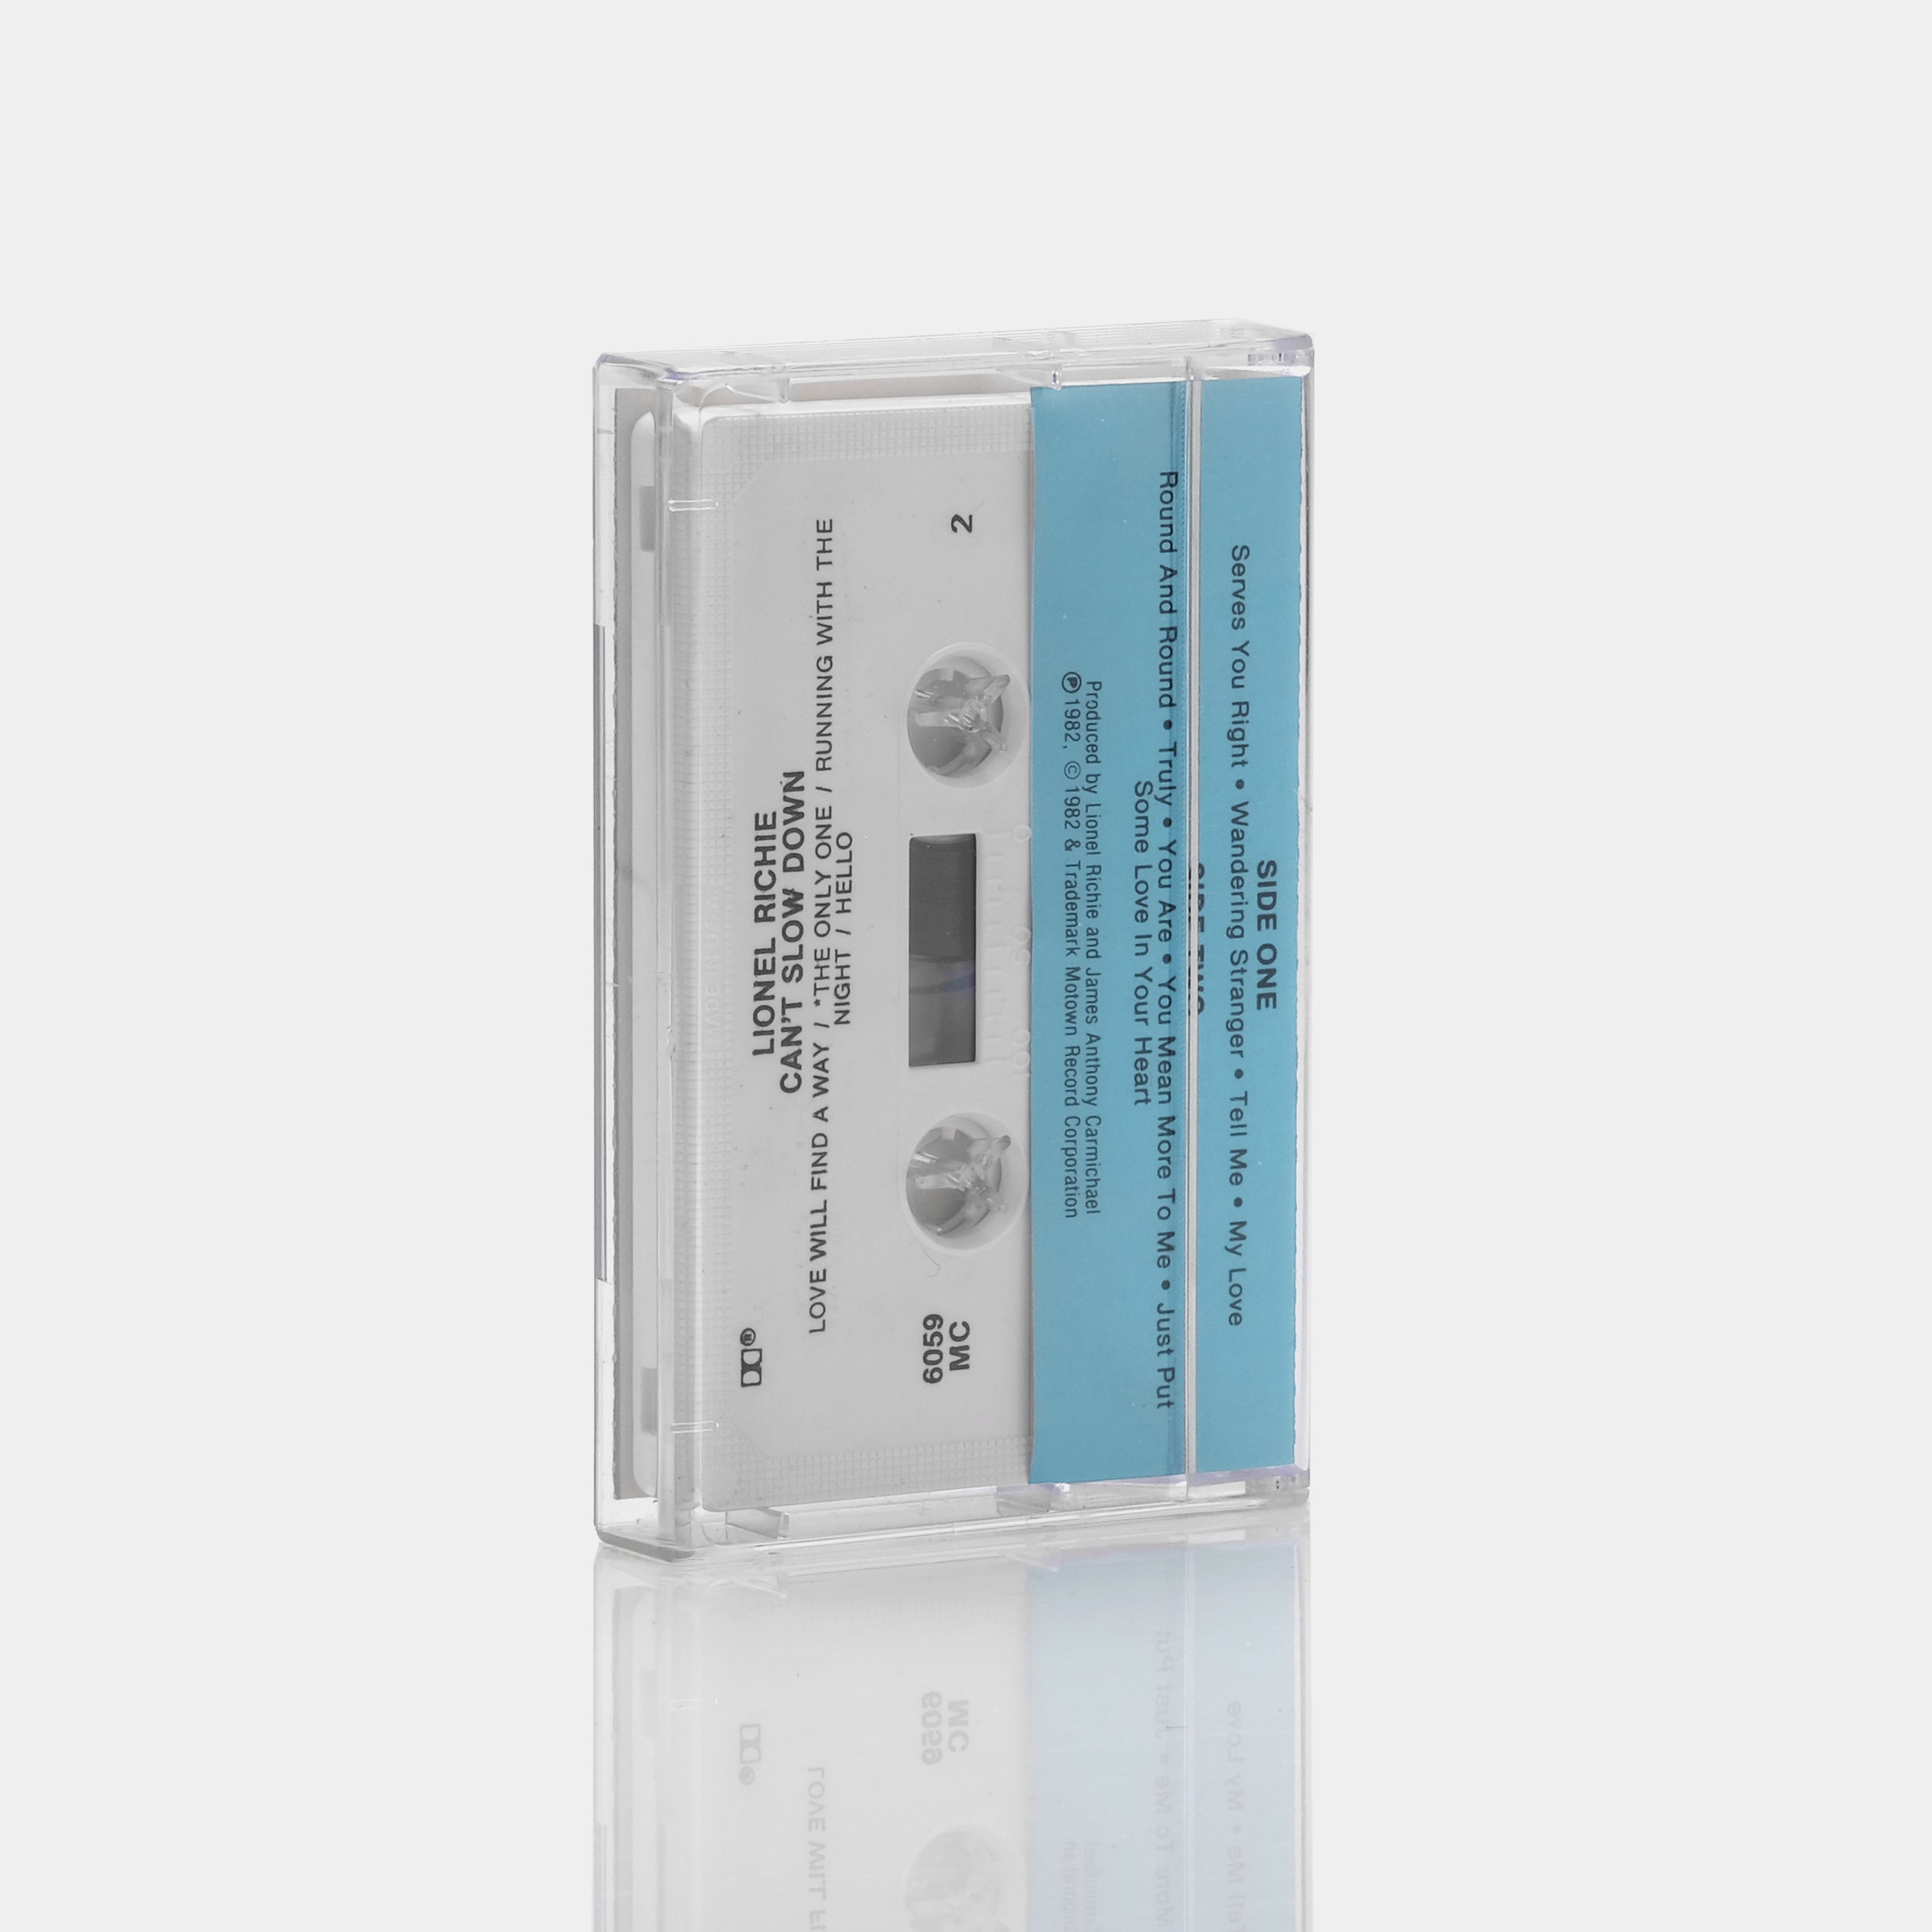 Lionel Richie - Lionel Richie Cassette Tape